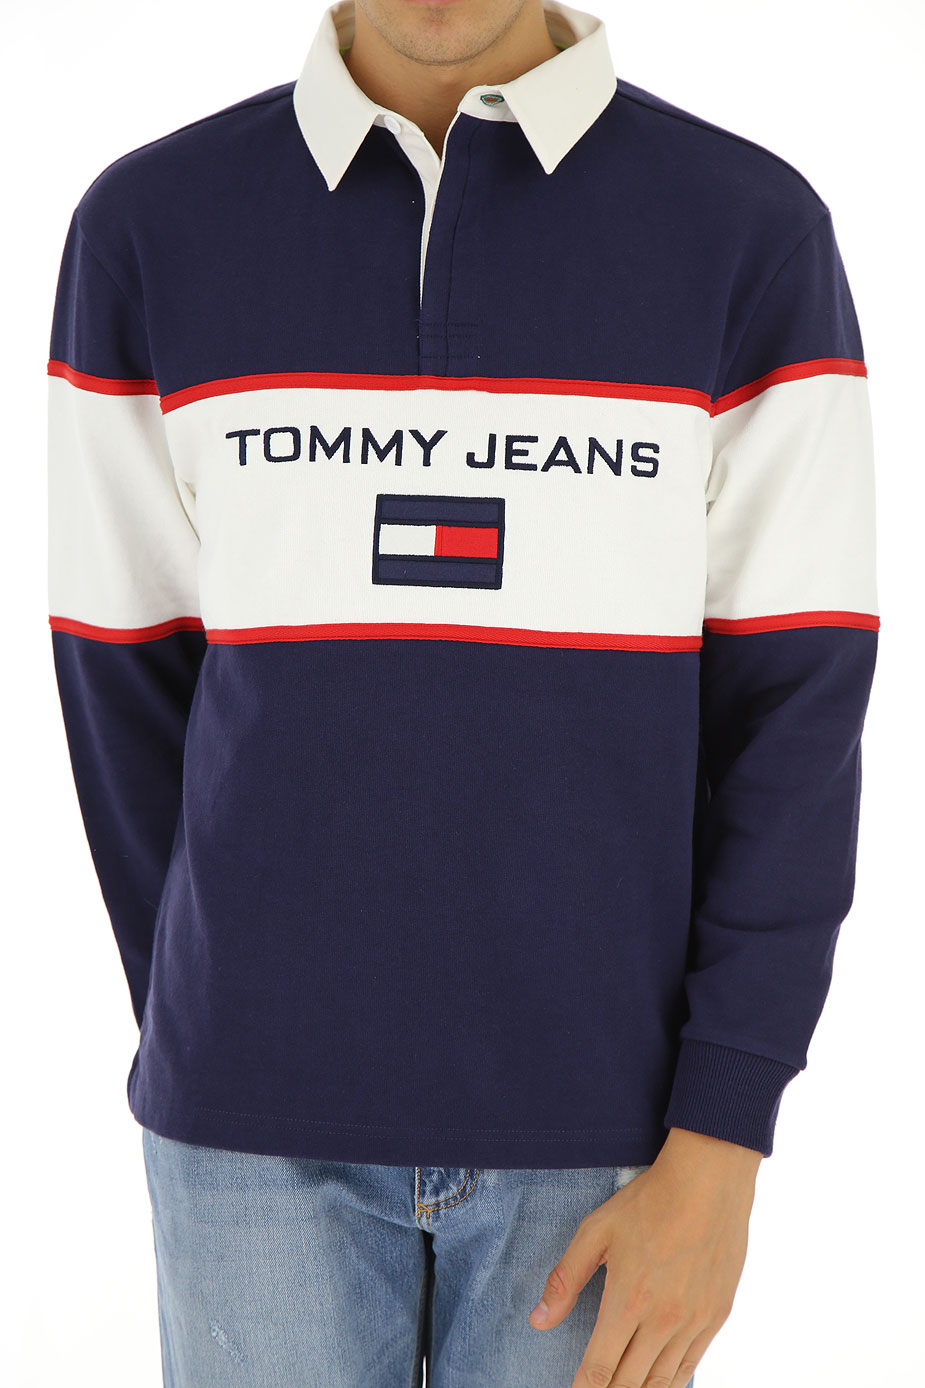 Mens Clothing Tommy Hilfiger, Style code dm0dm05237409